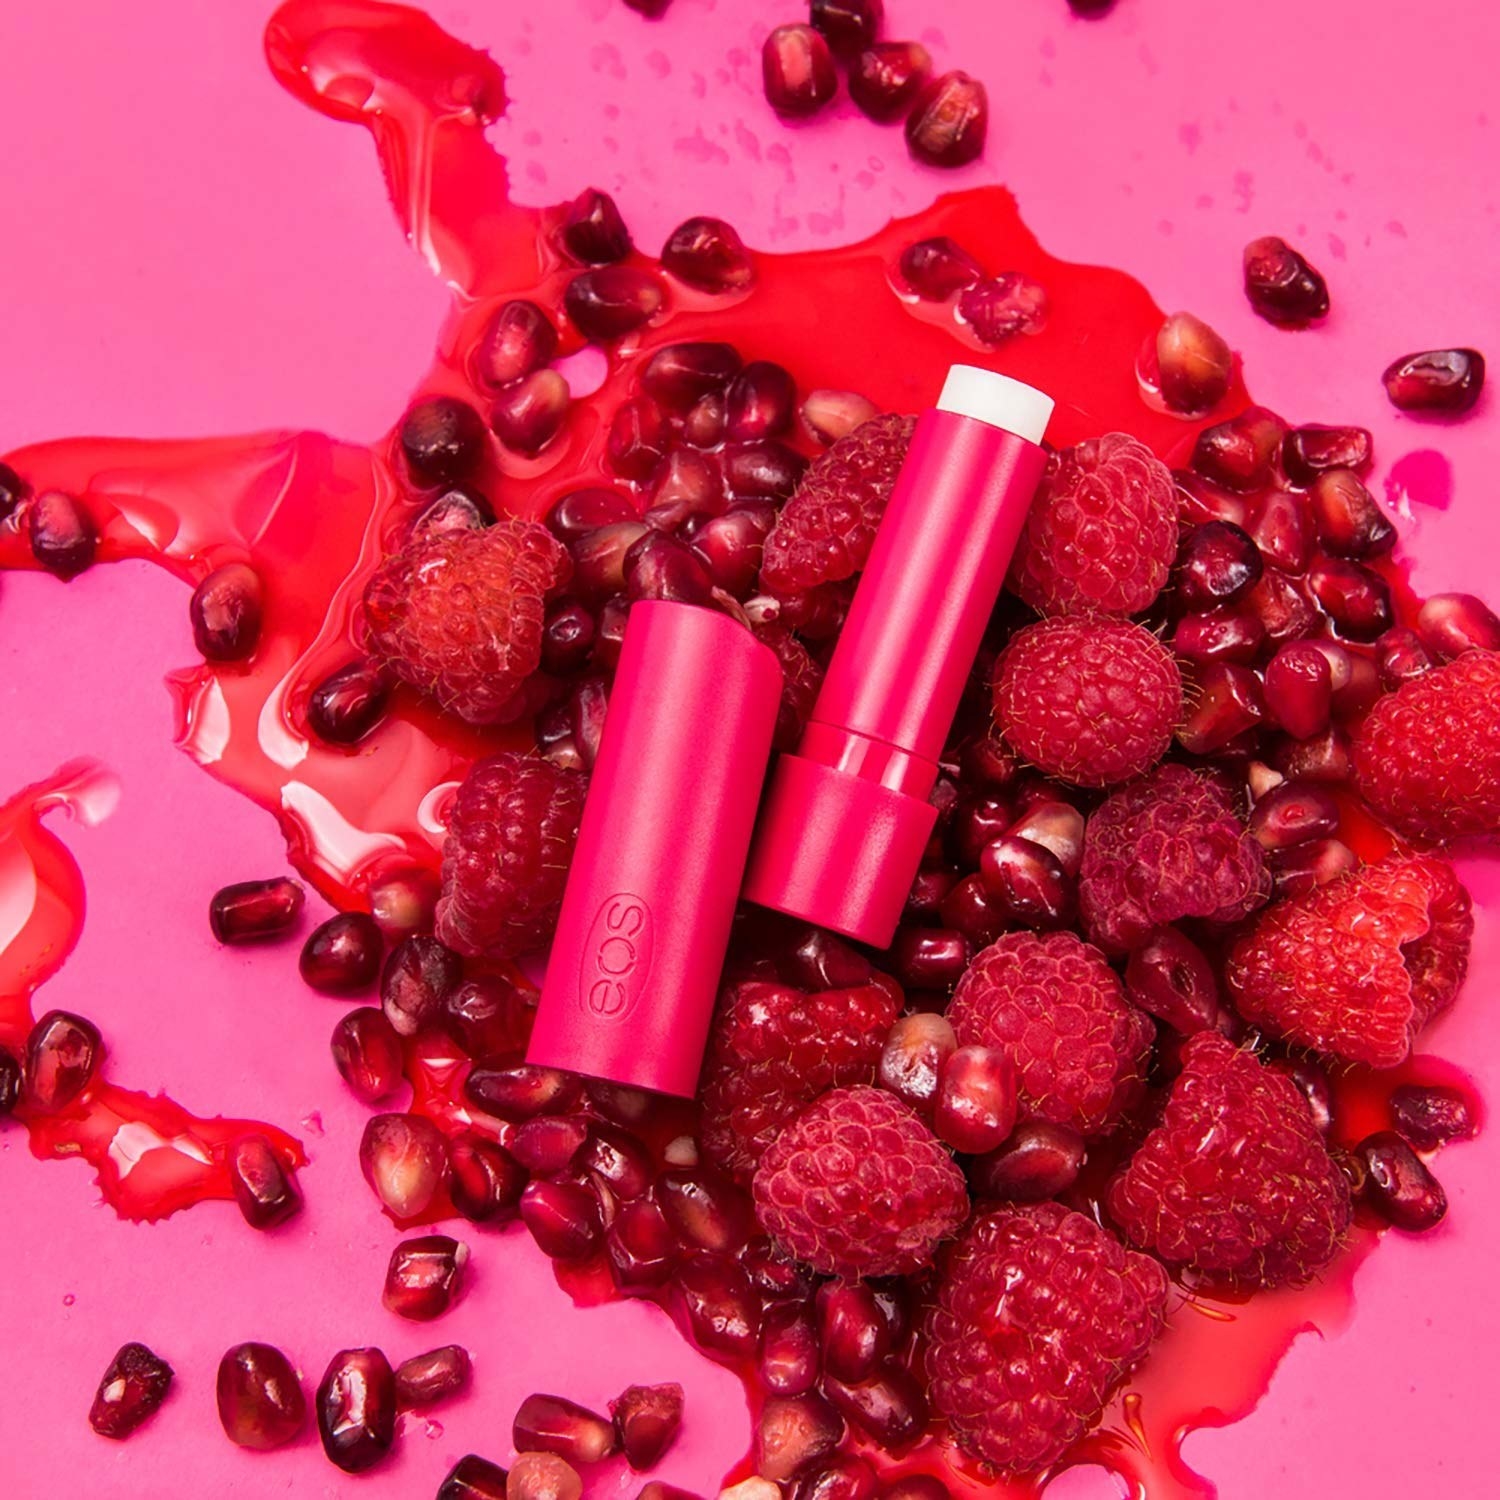 A tube of raspberry pomegranate flavored lip balm